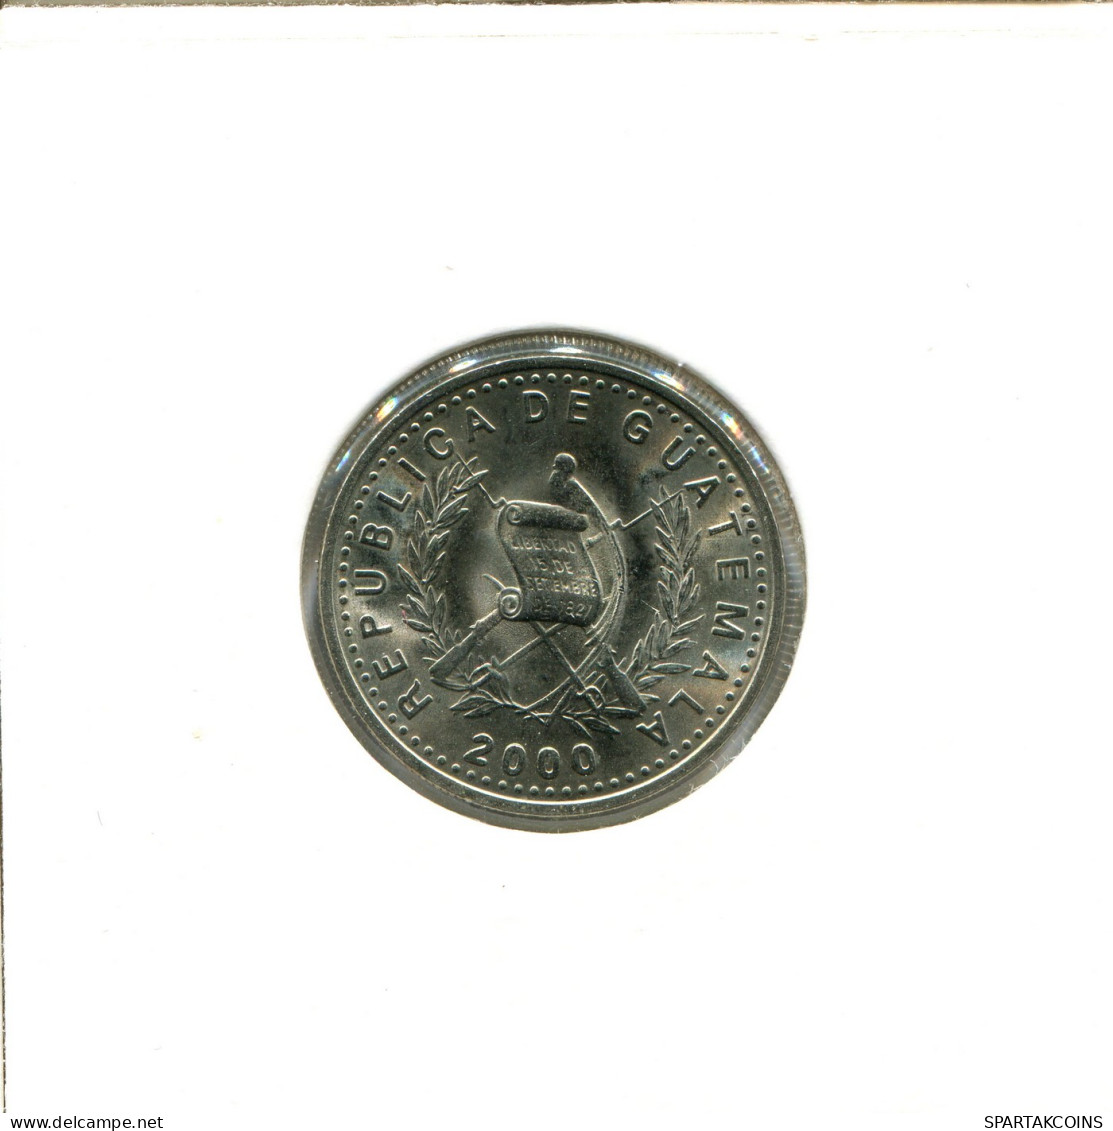 10 CENTAVOS 2000 GUATEMALA Coin #AX705.U - Guatemala